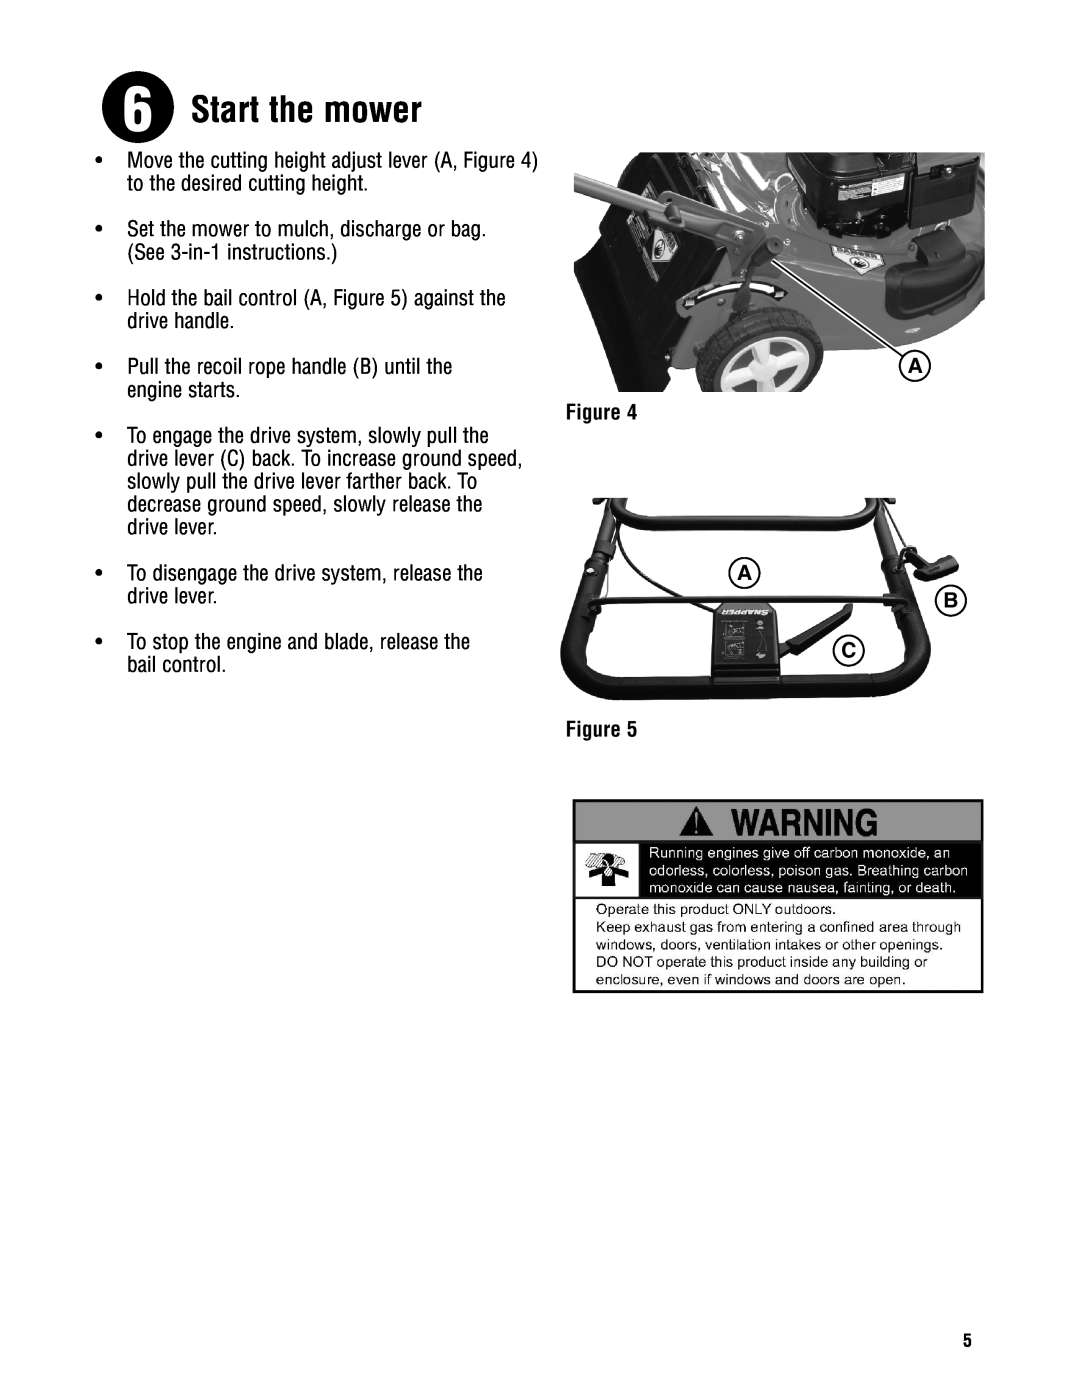 Snapper ESPV21675 manual Start the mower 